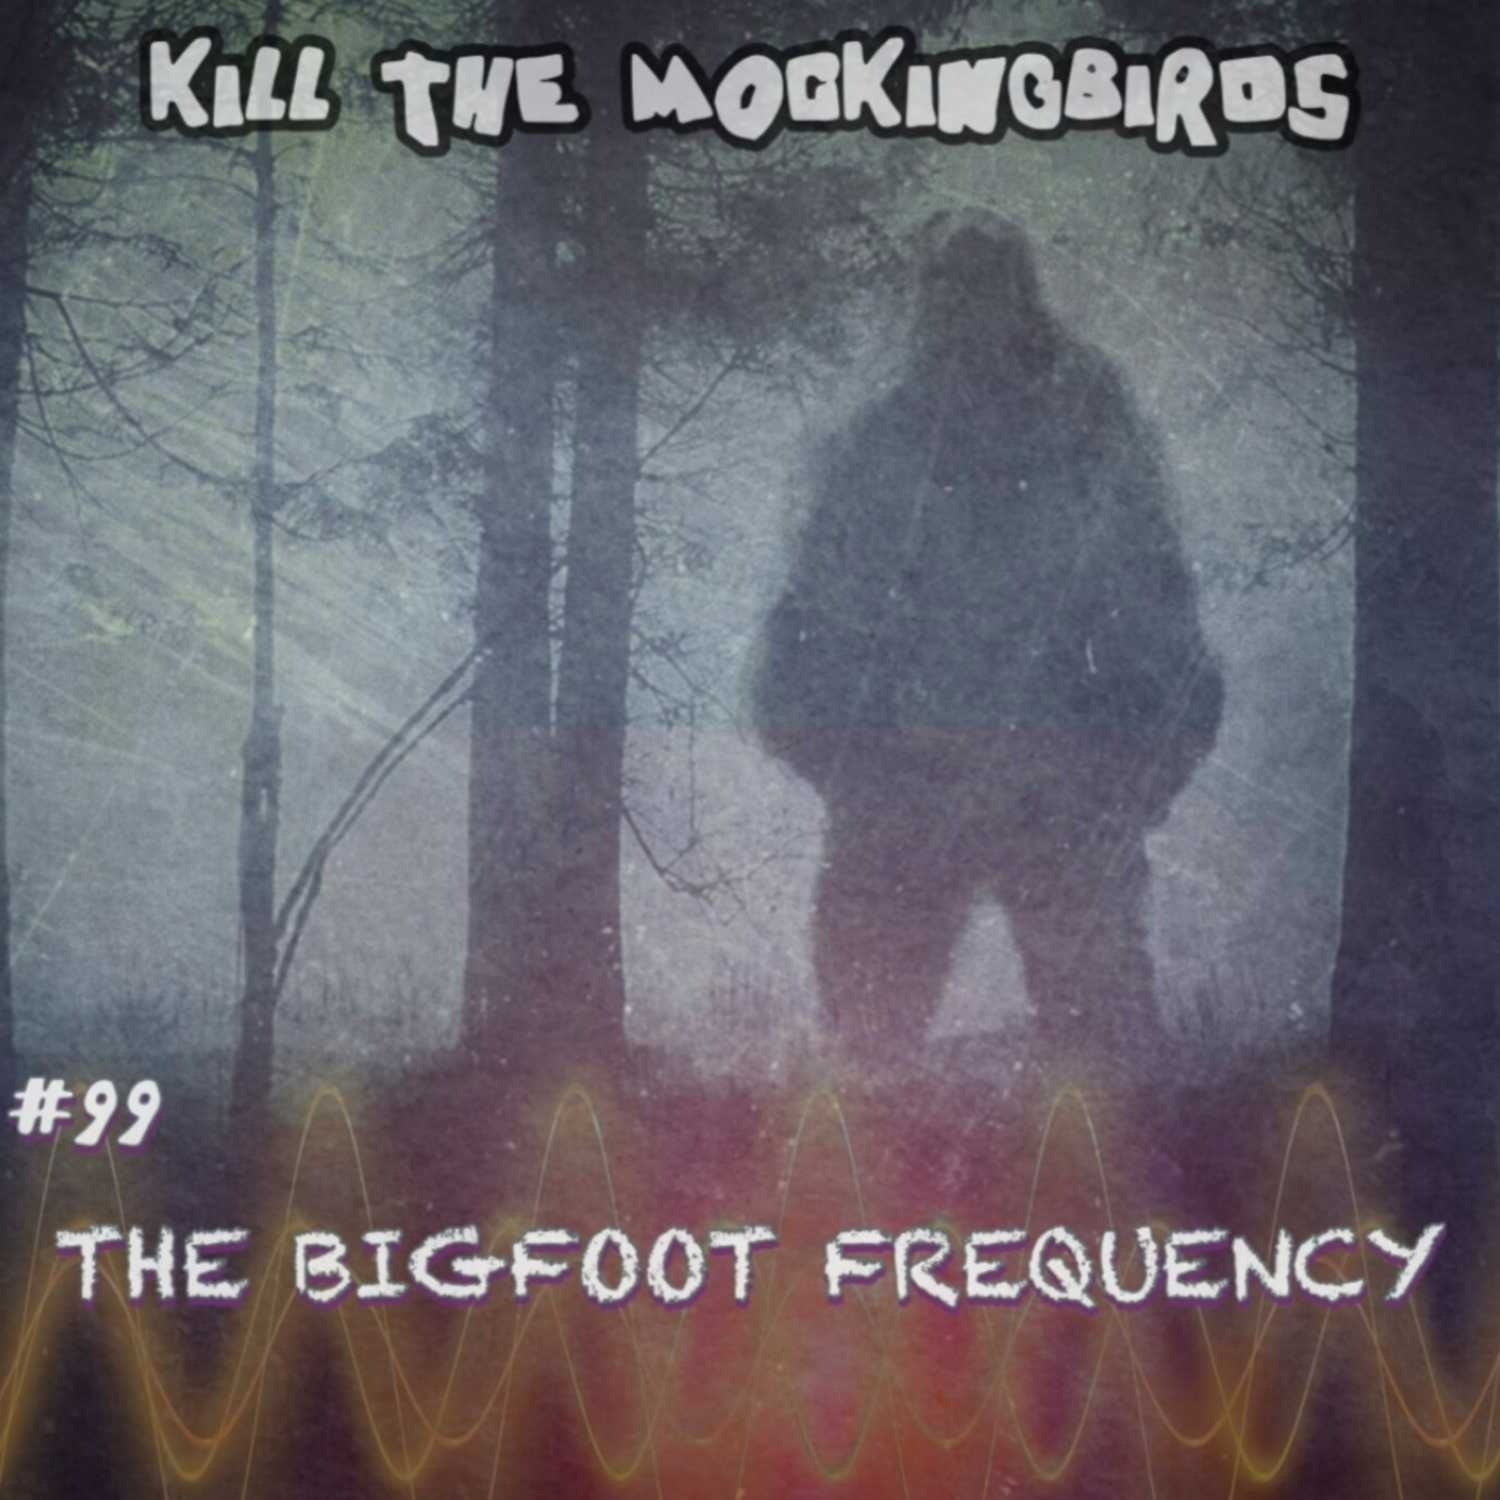 #99 “THE BIGFOOT FREQUENCY” w/ Erick Szilagyi